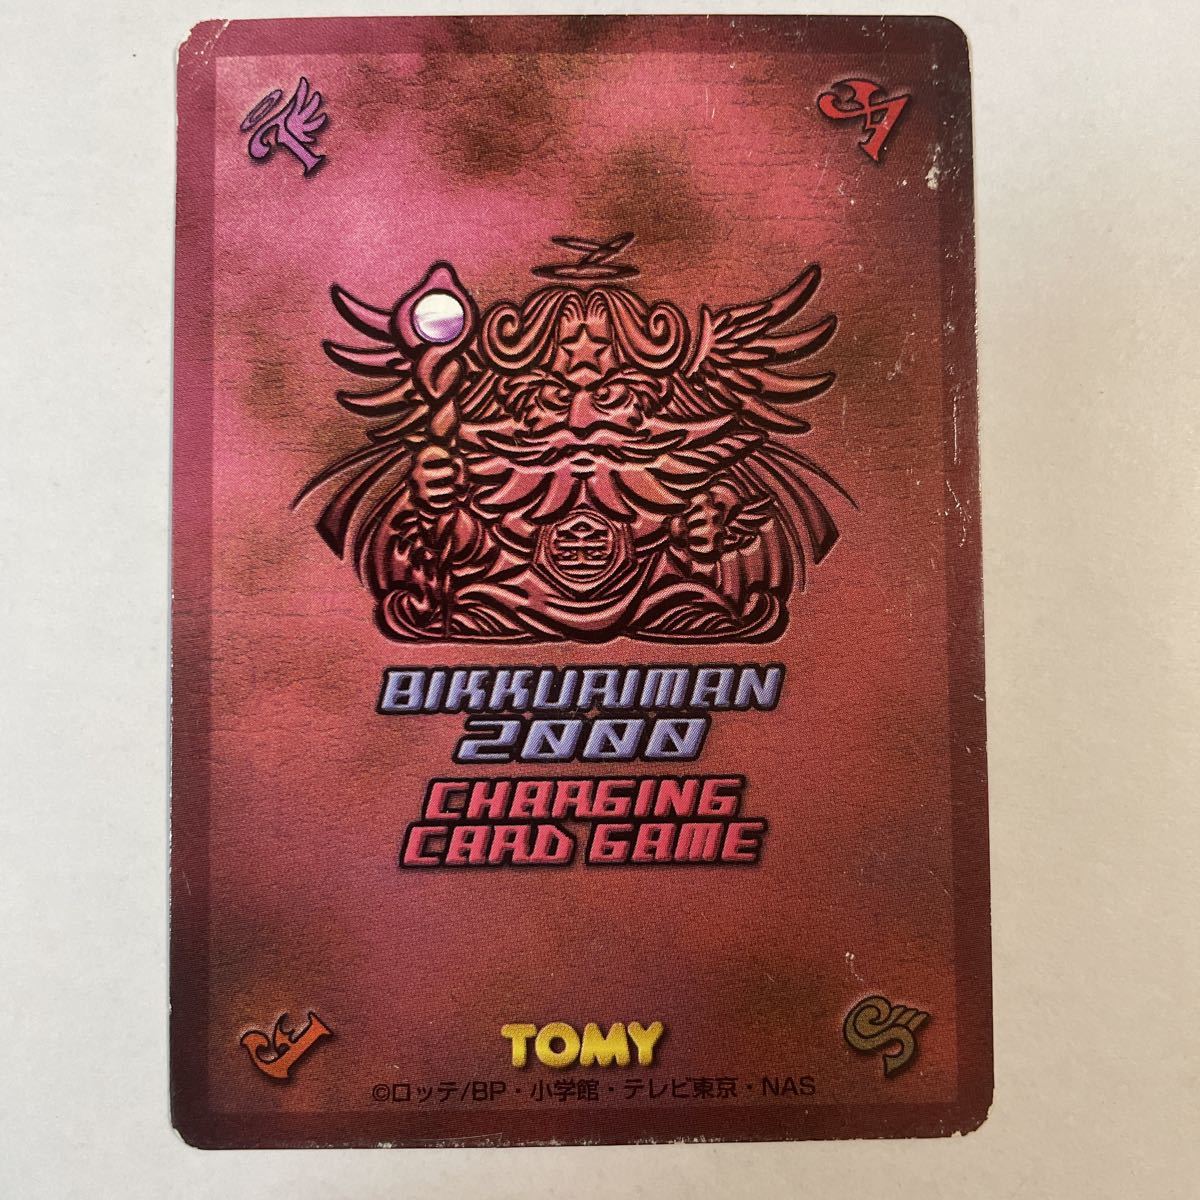 . hat-trick Bikkuri man 2000 карты Tommy коллекционные карточки карта kila